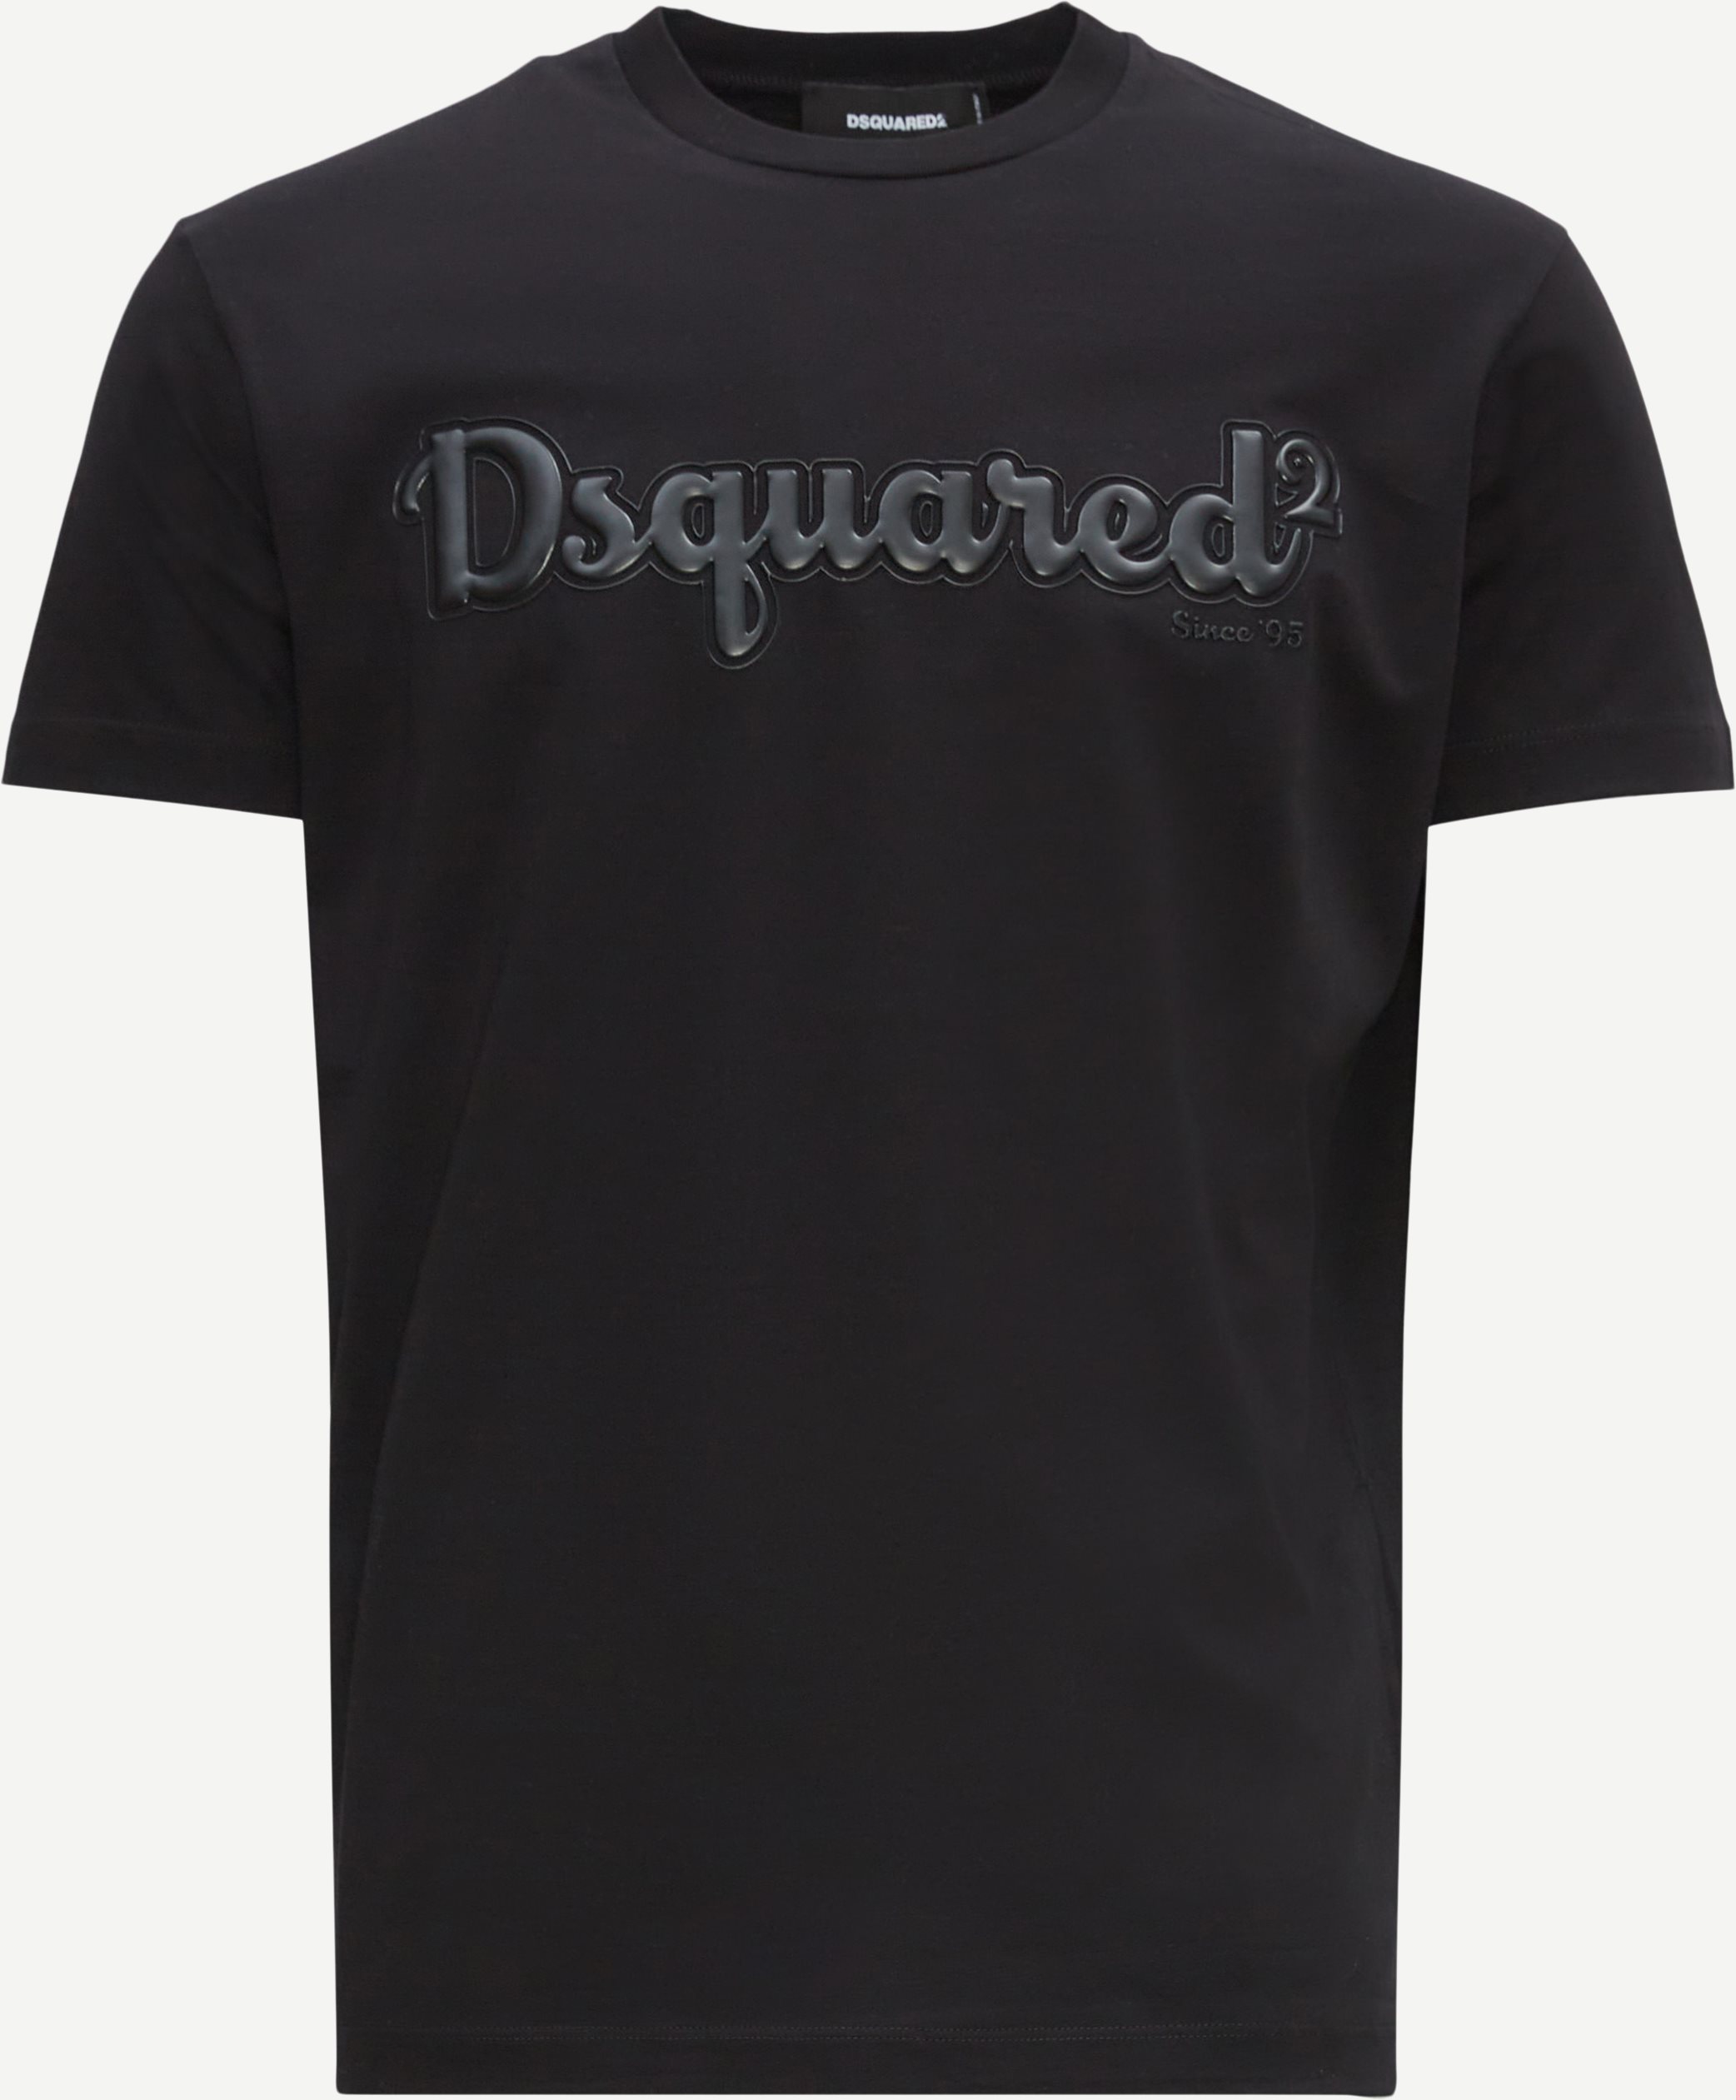 T-shirts - Regular fit - Black